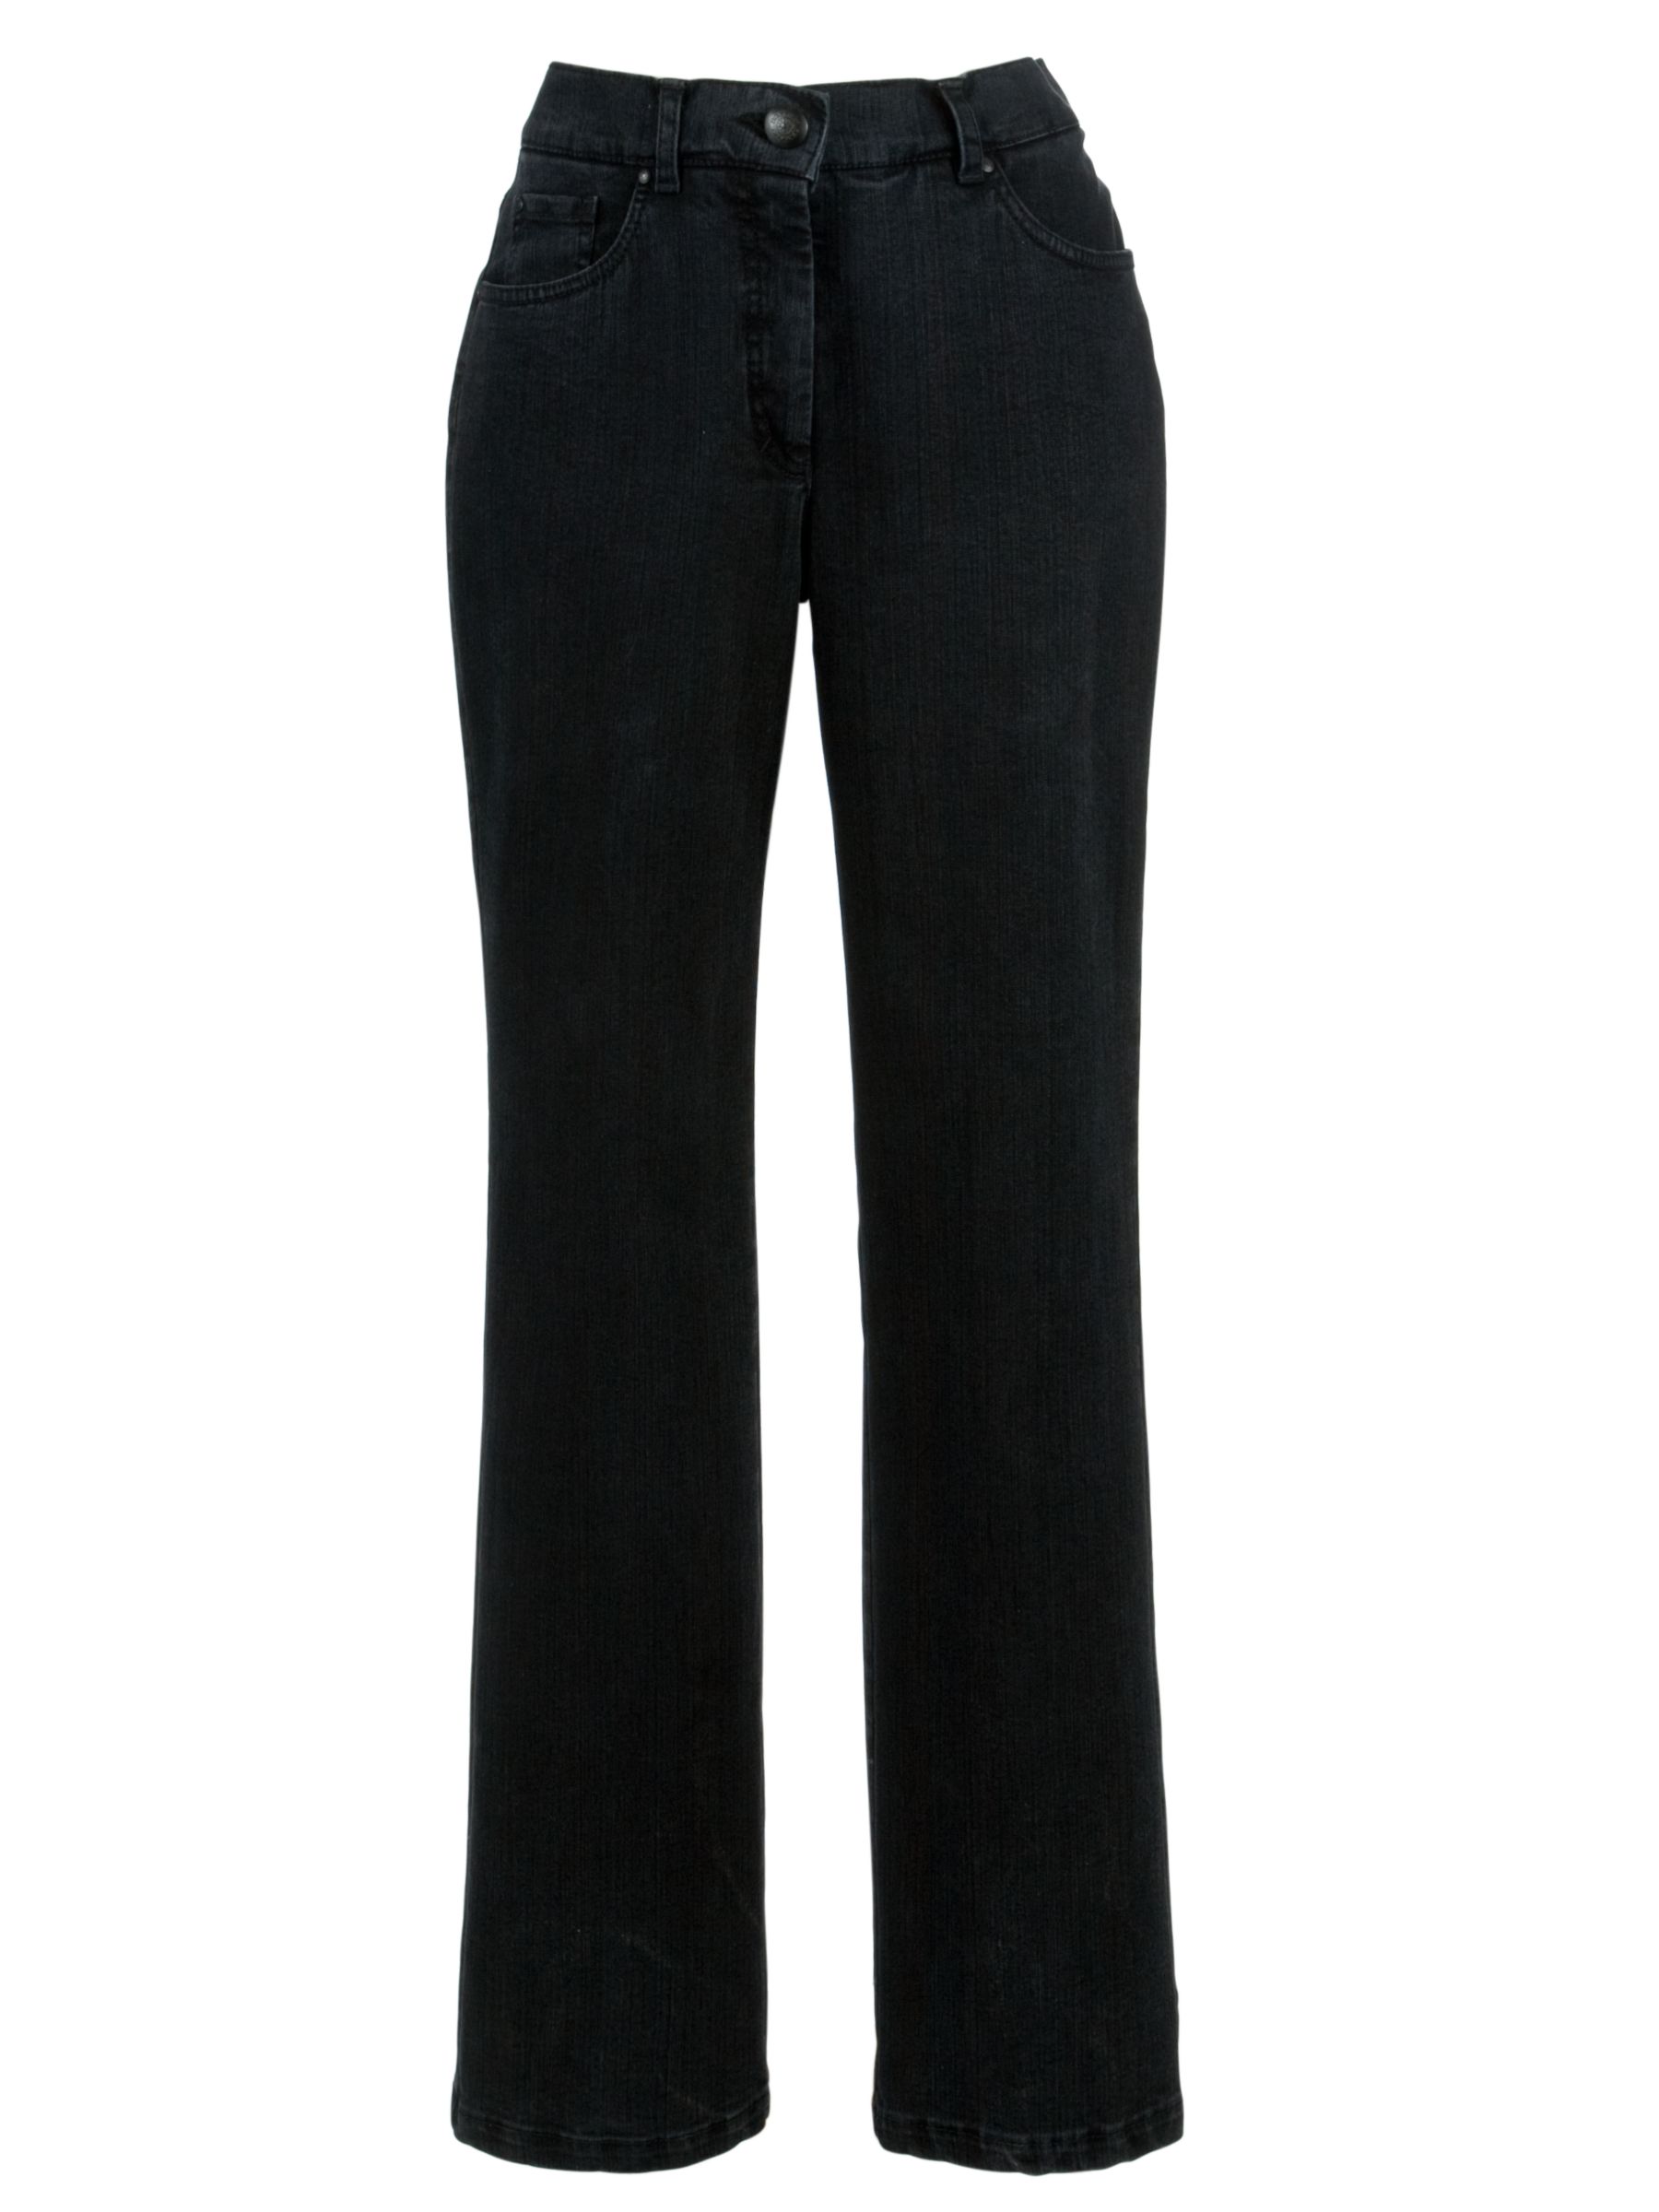 black jeans short length